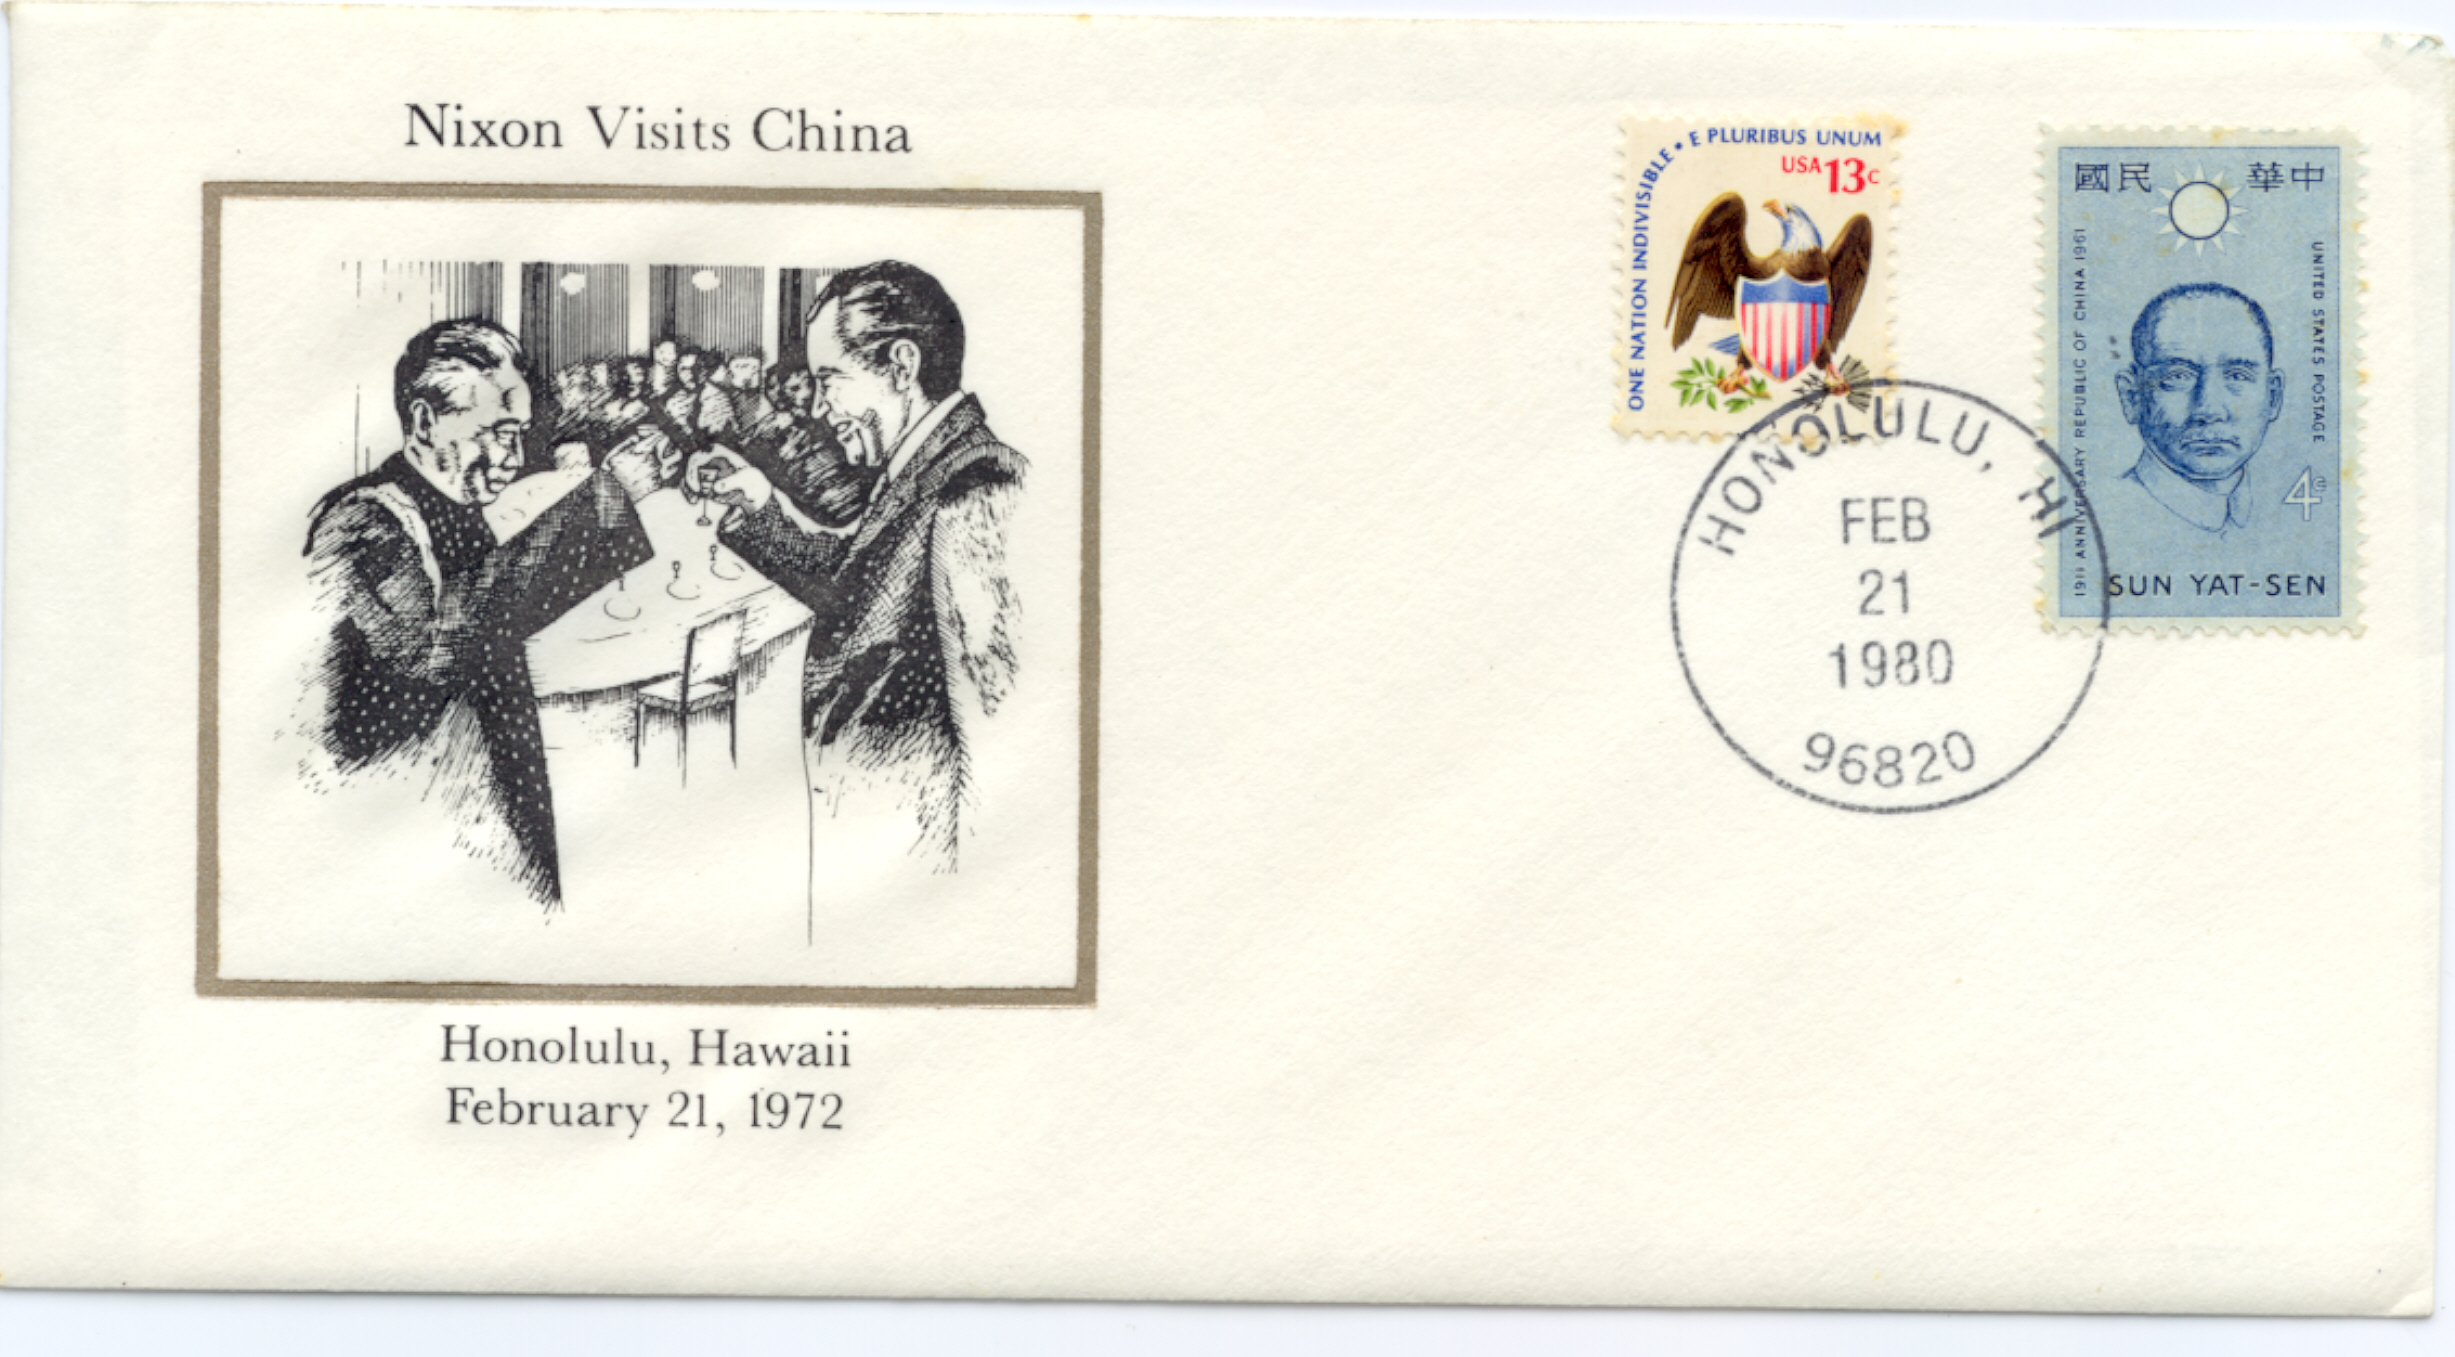 Nixon Visits China Anniv 2-21-80